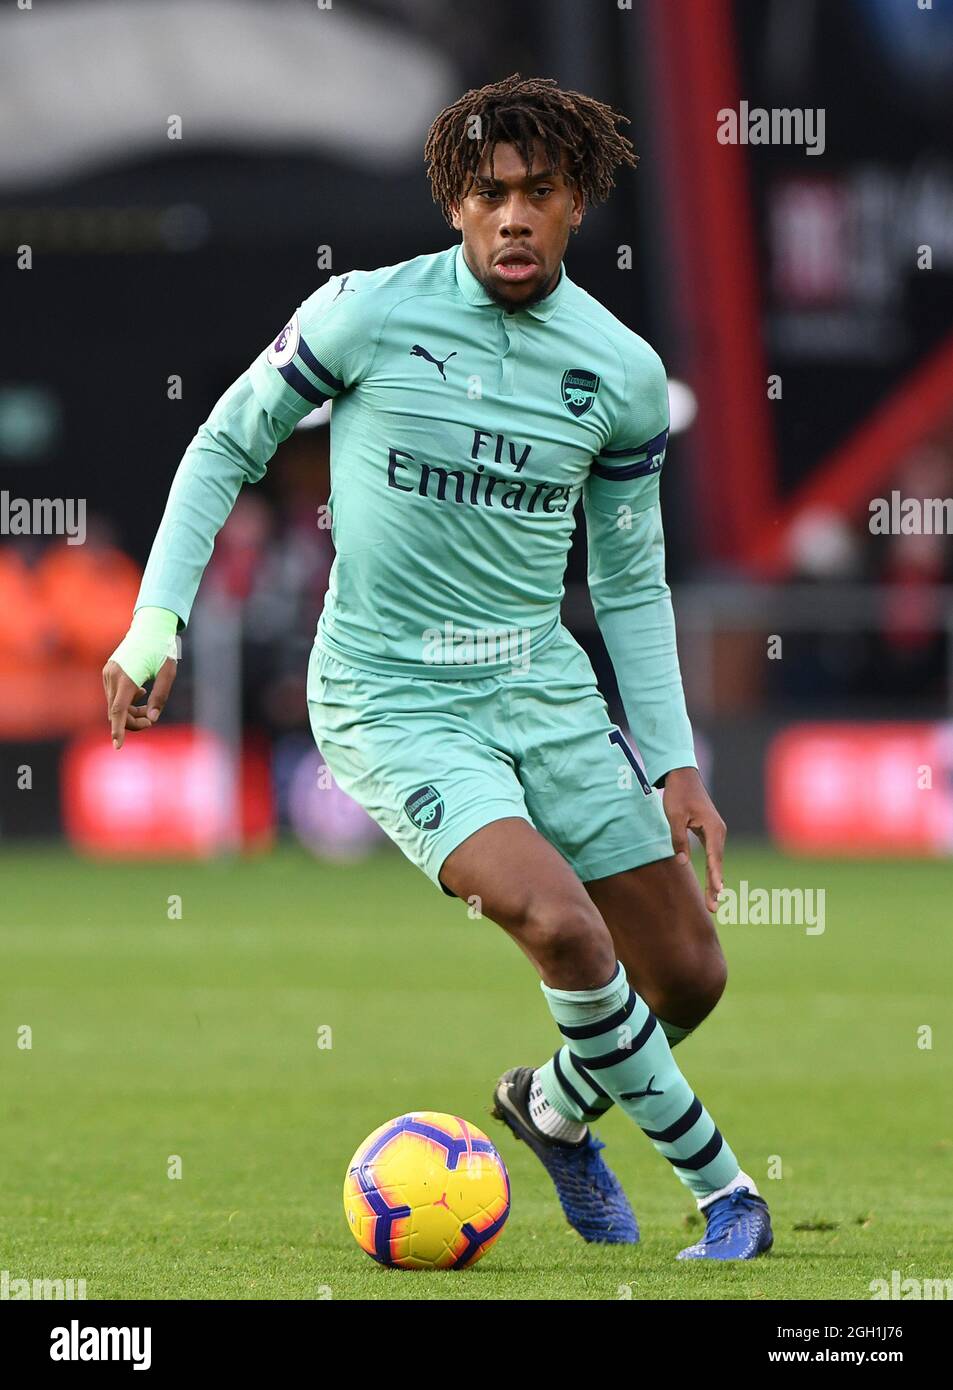 Alex Iwobi of Arsenal - AFC Bournemouth v Arsenal, Premier League, Vitality Stadium, Bournemouth - 25th November 2018 Stock Photo